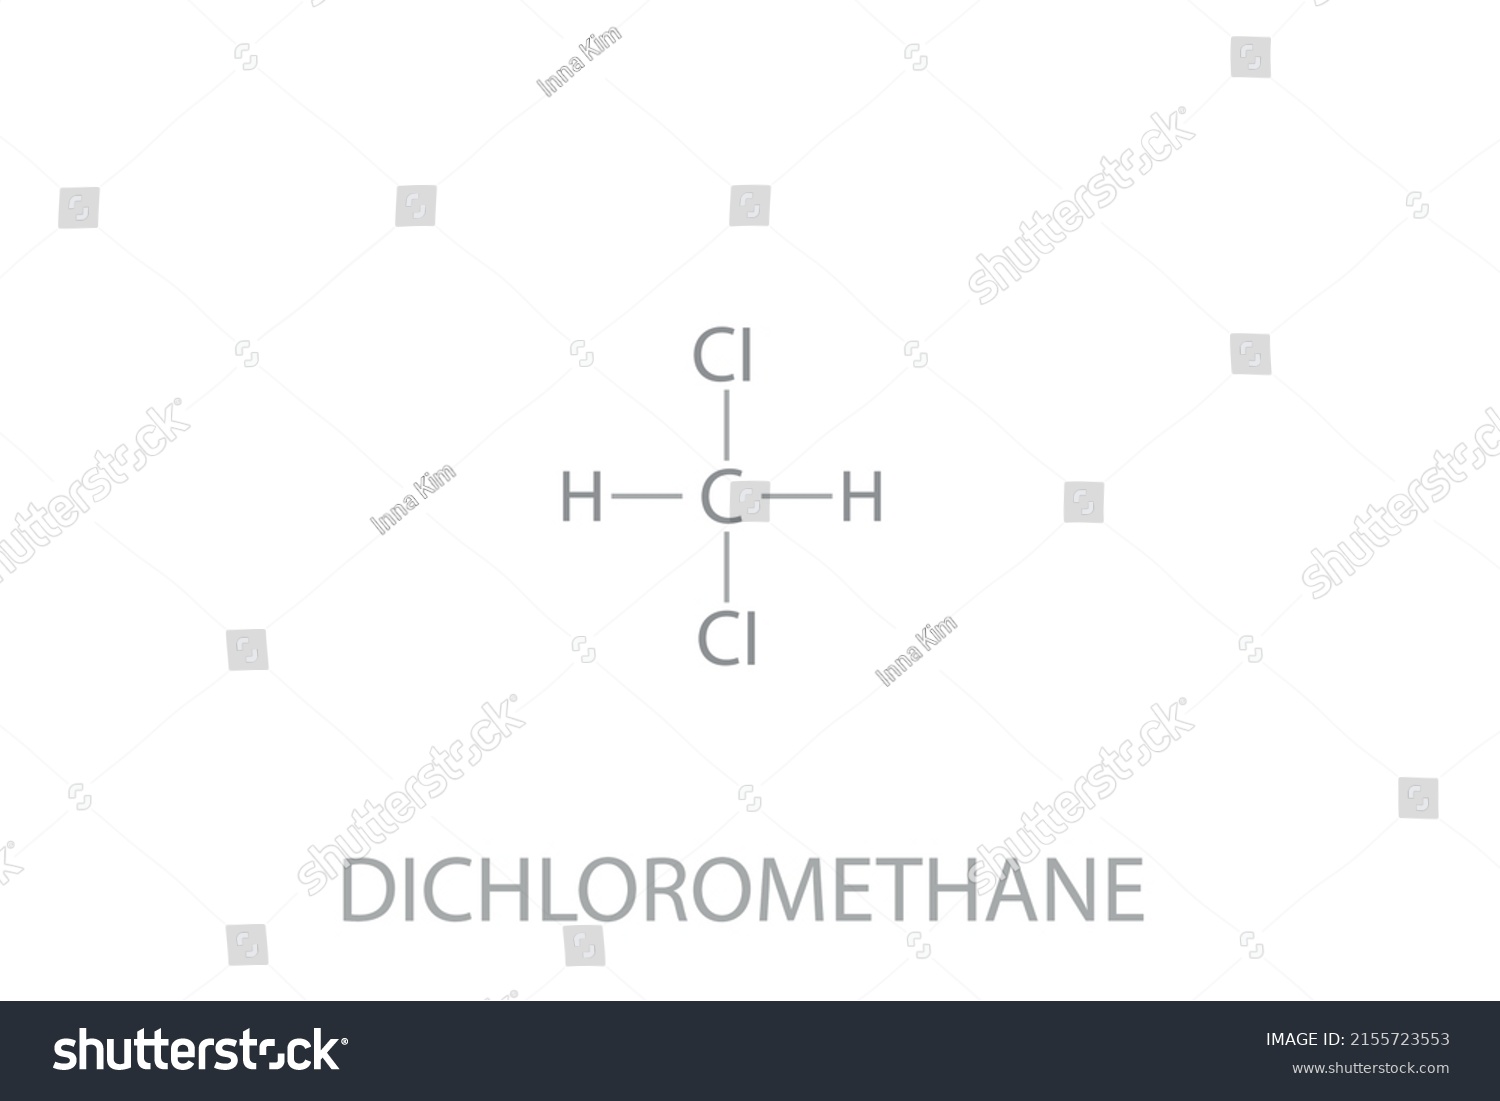 Dichloromethane Molecular Skeletal Chemical Formula Stock Vector ...